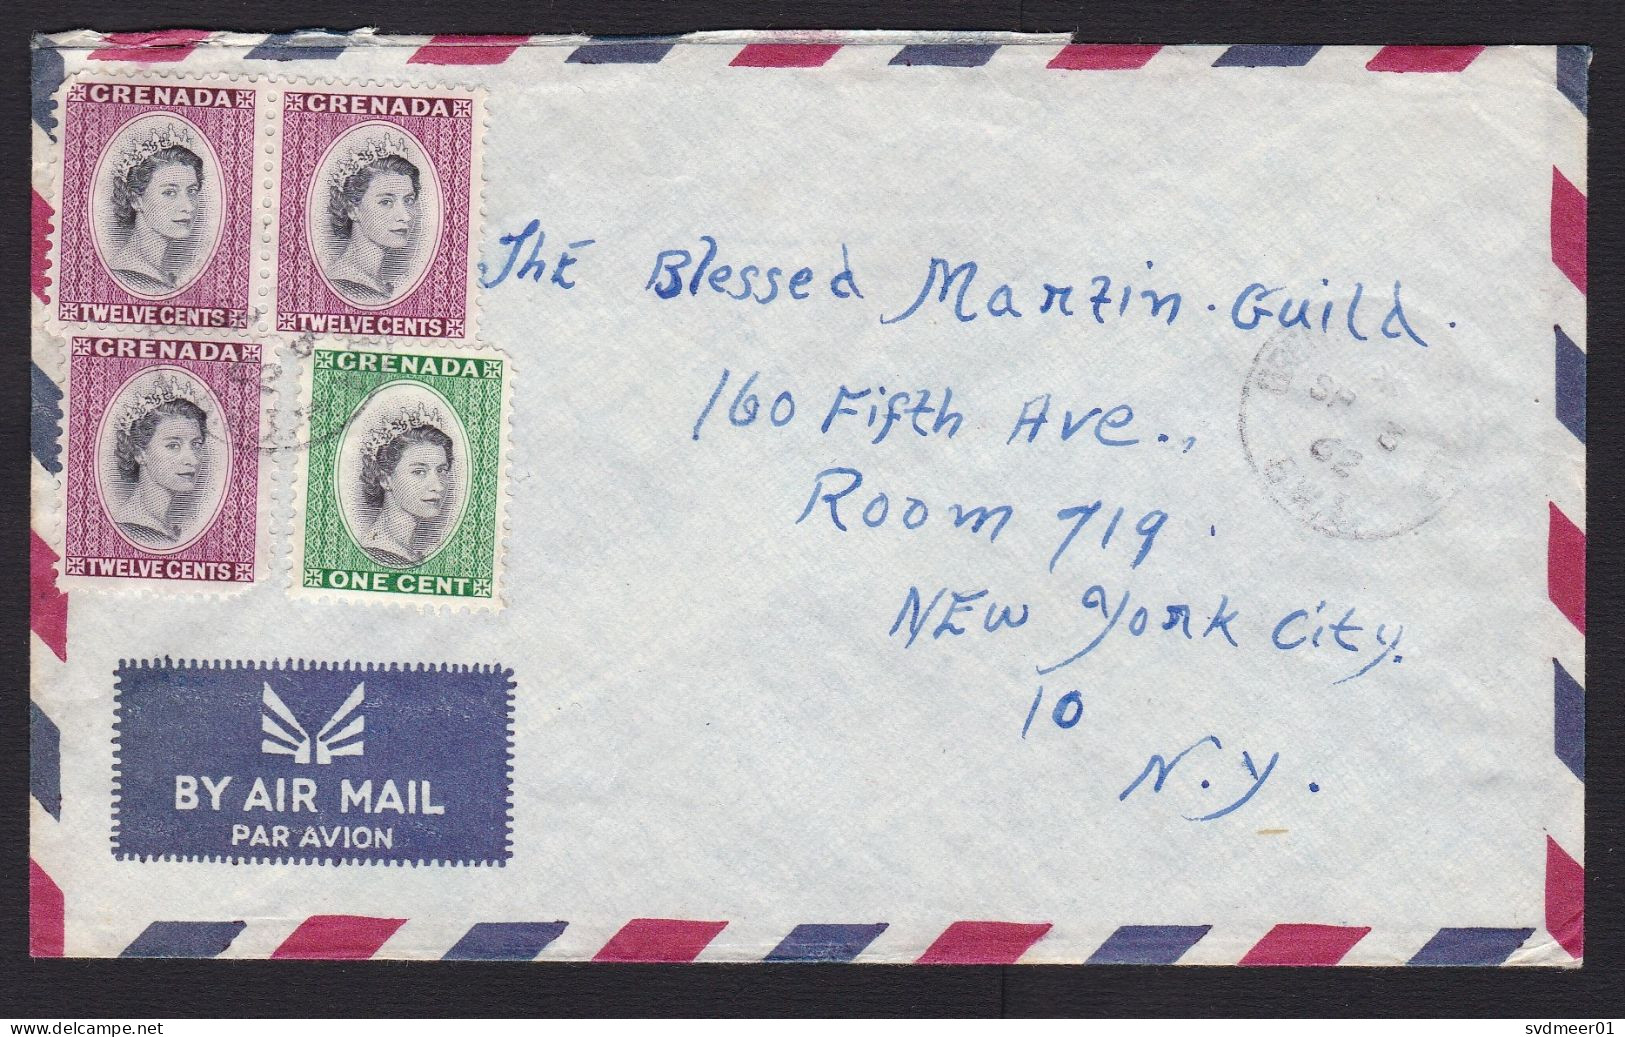 Grenada: Airmail Cover To USA, 1962, 4 Stamps, Queen Elizabeth (minor Damage) - Grenada (...-1974)